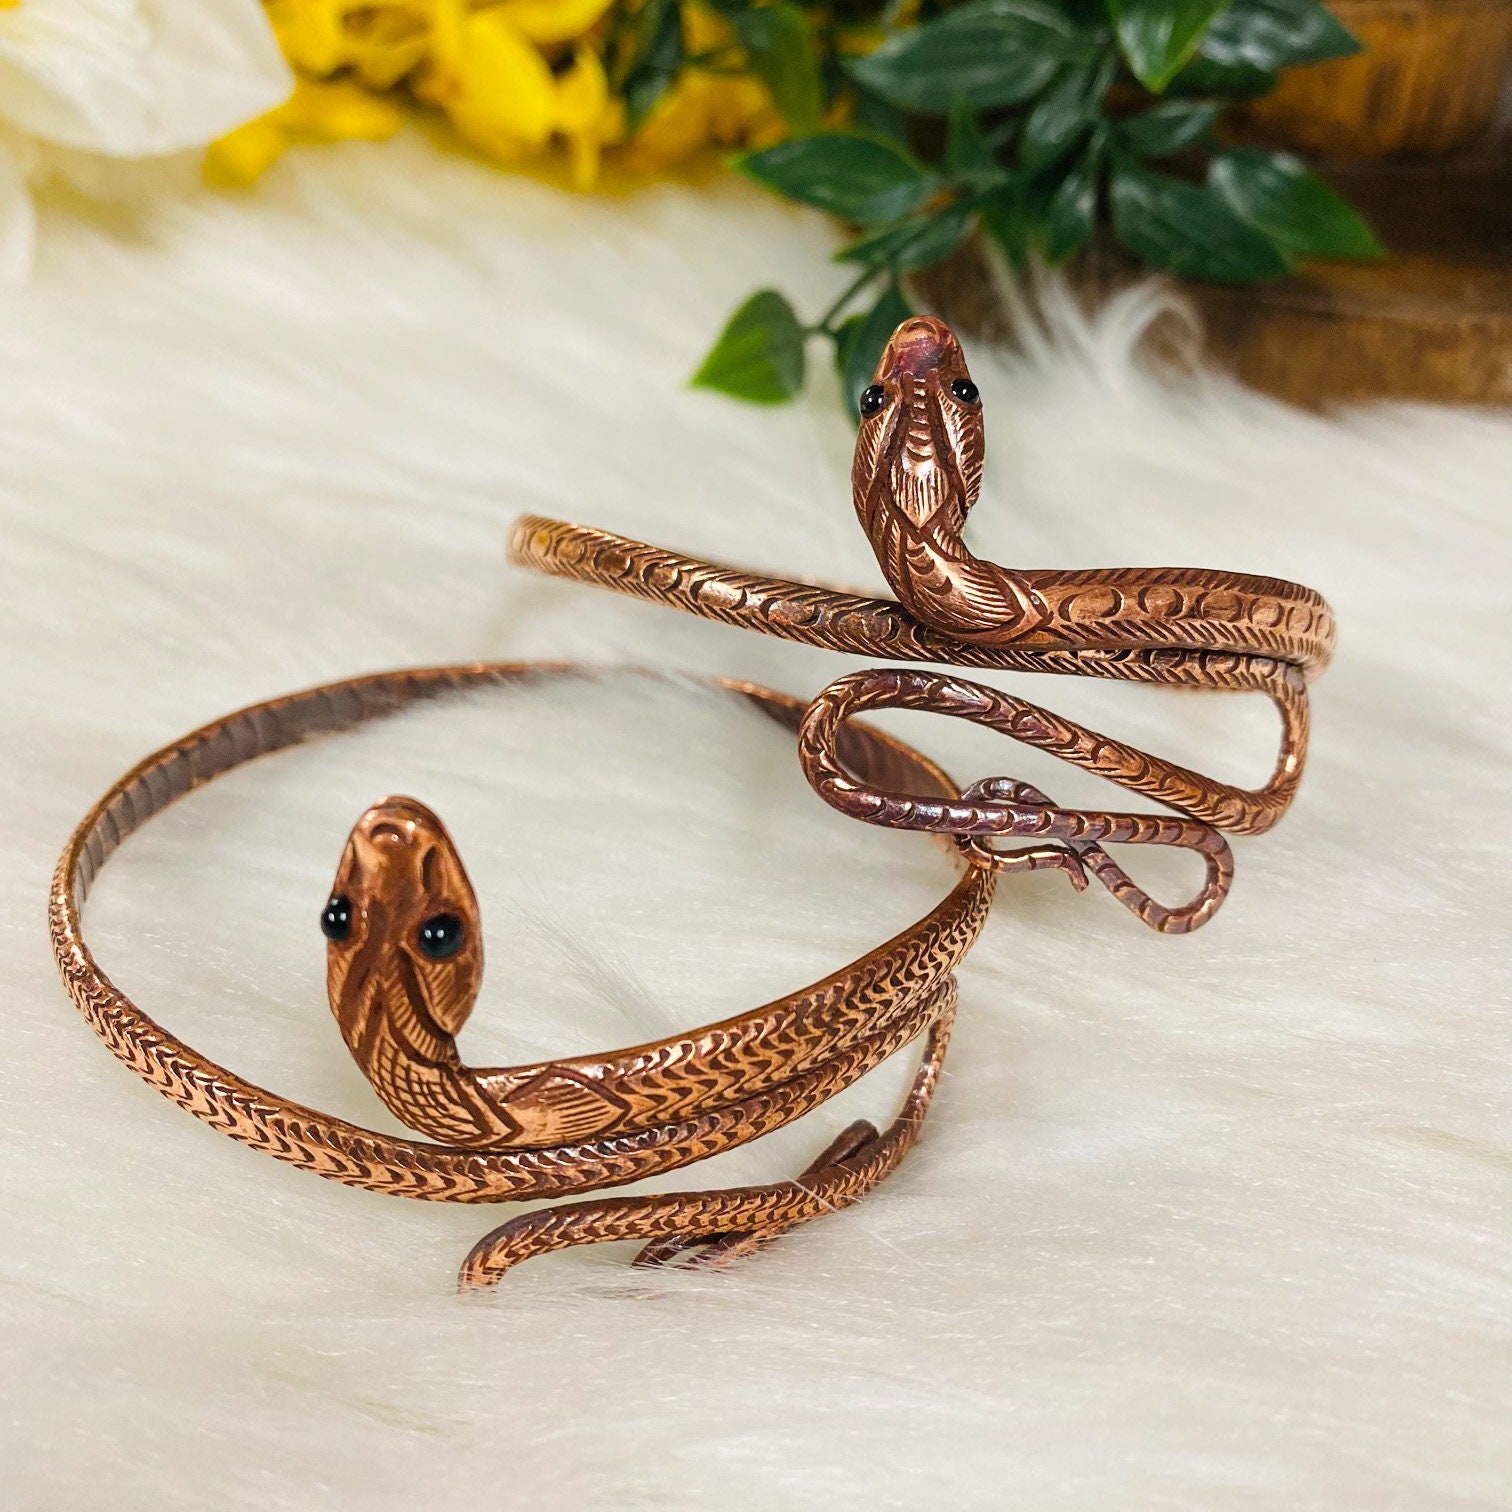 FLOLA Copper Zircon Snake Bangle Bracelet for Women Gold Plated Cuff  Bangles Fashion Animal Jewelry Gifts